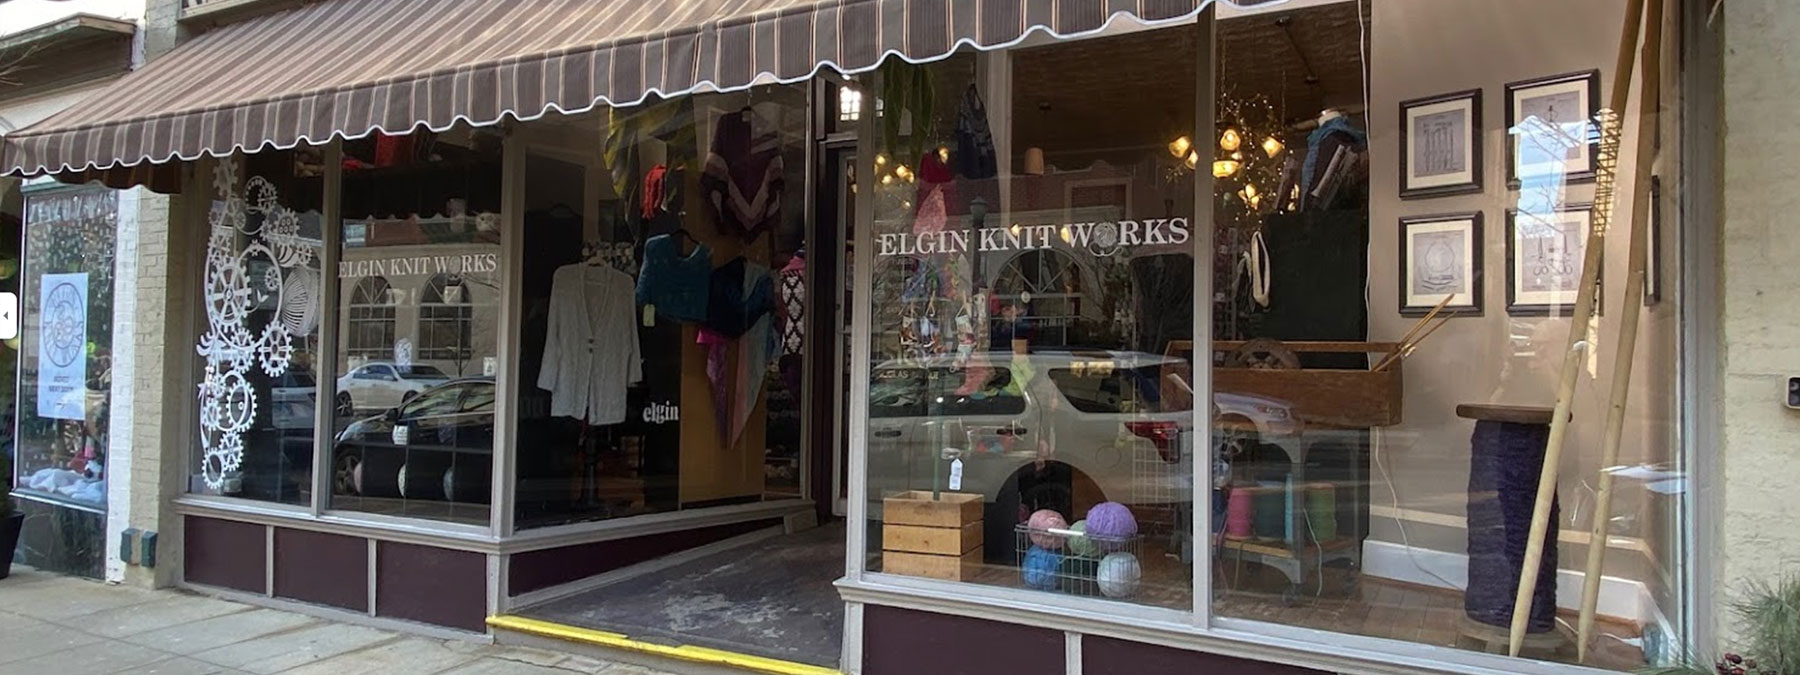 elgin knit works exterior 1800x675